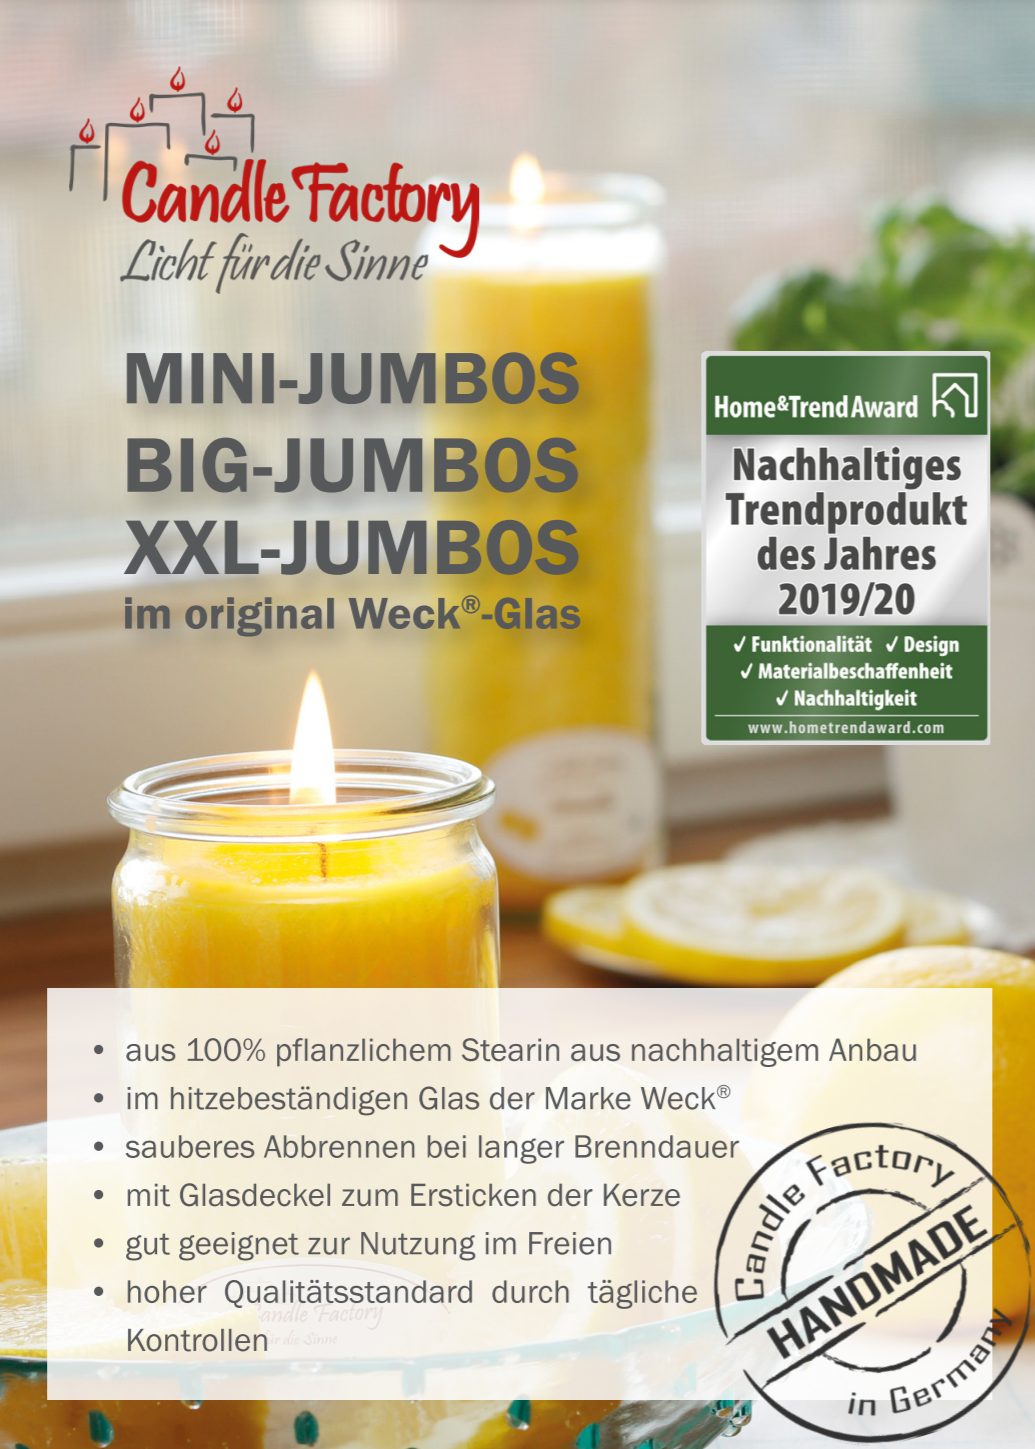 Candle Factory Mini-Jumbo Erdbeer-Rhabarber